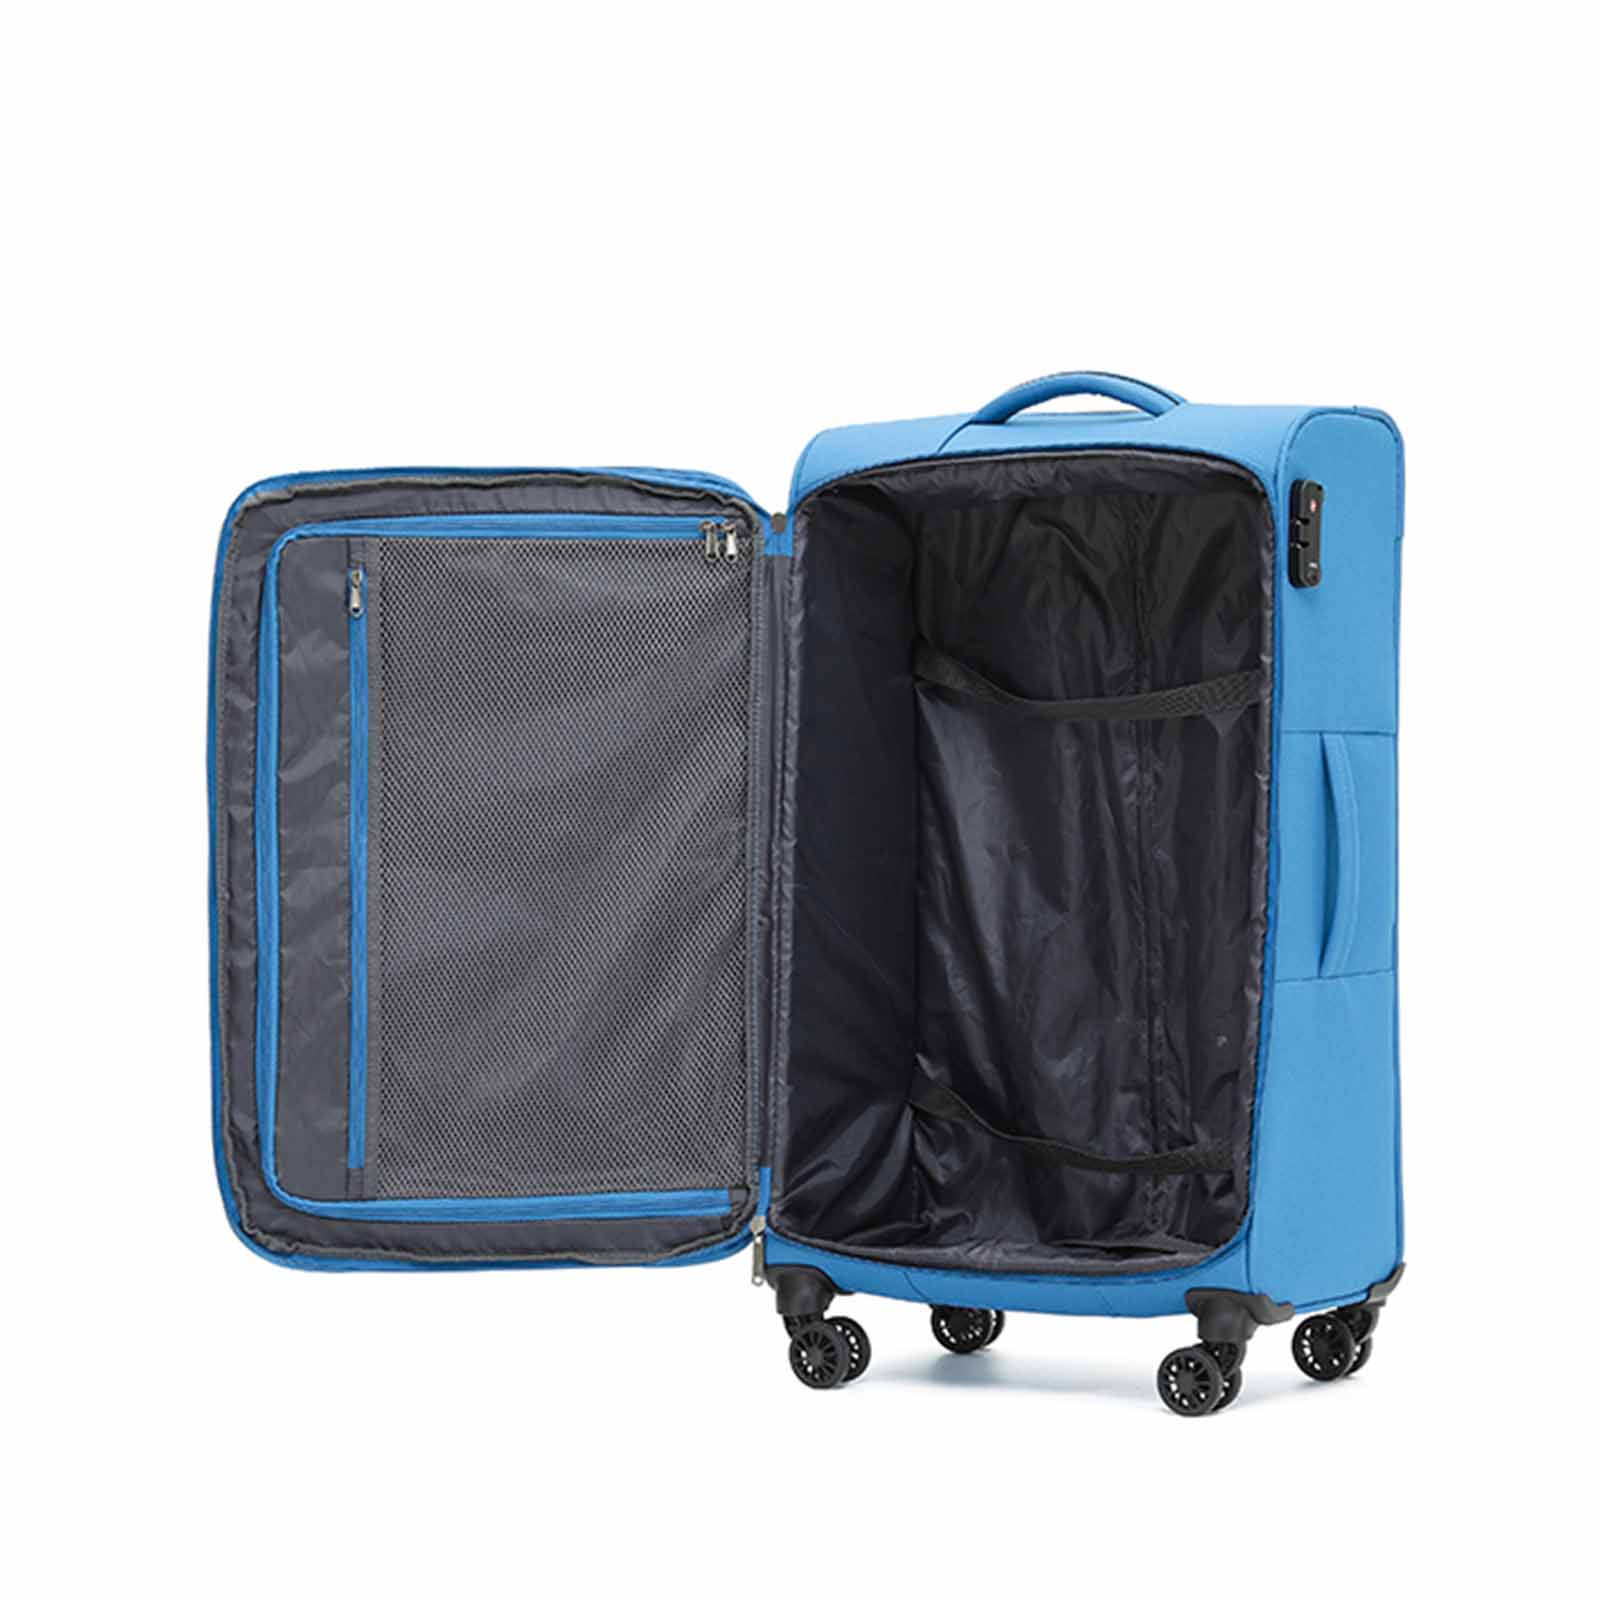 Tosca-Aviator-4-Wheel-Carry-On-Suitcase-Blue-Open